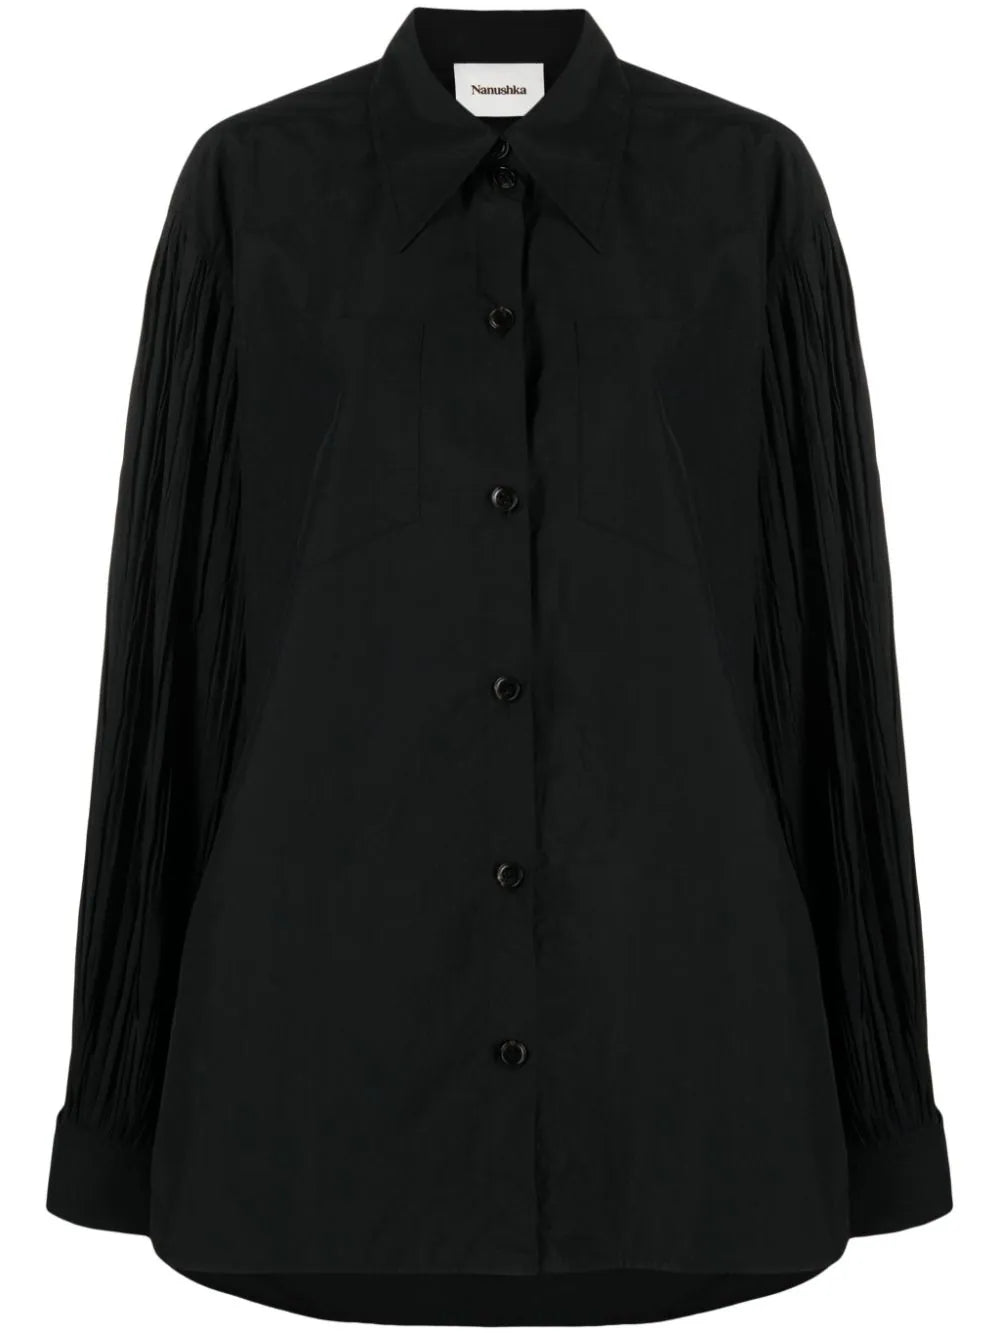 Nele Shirt in Black